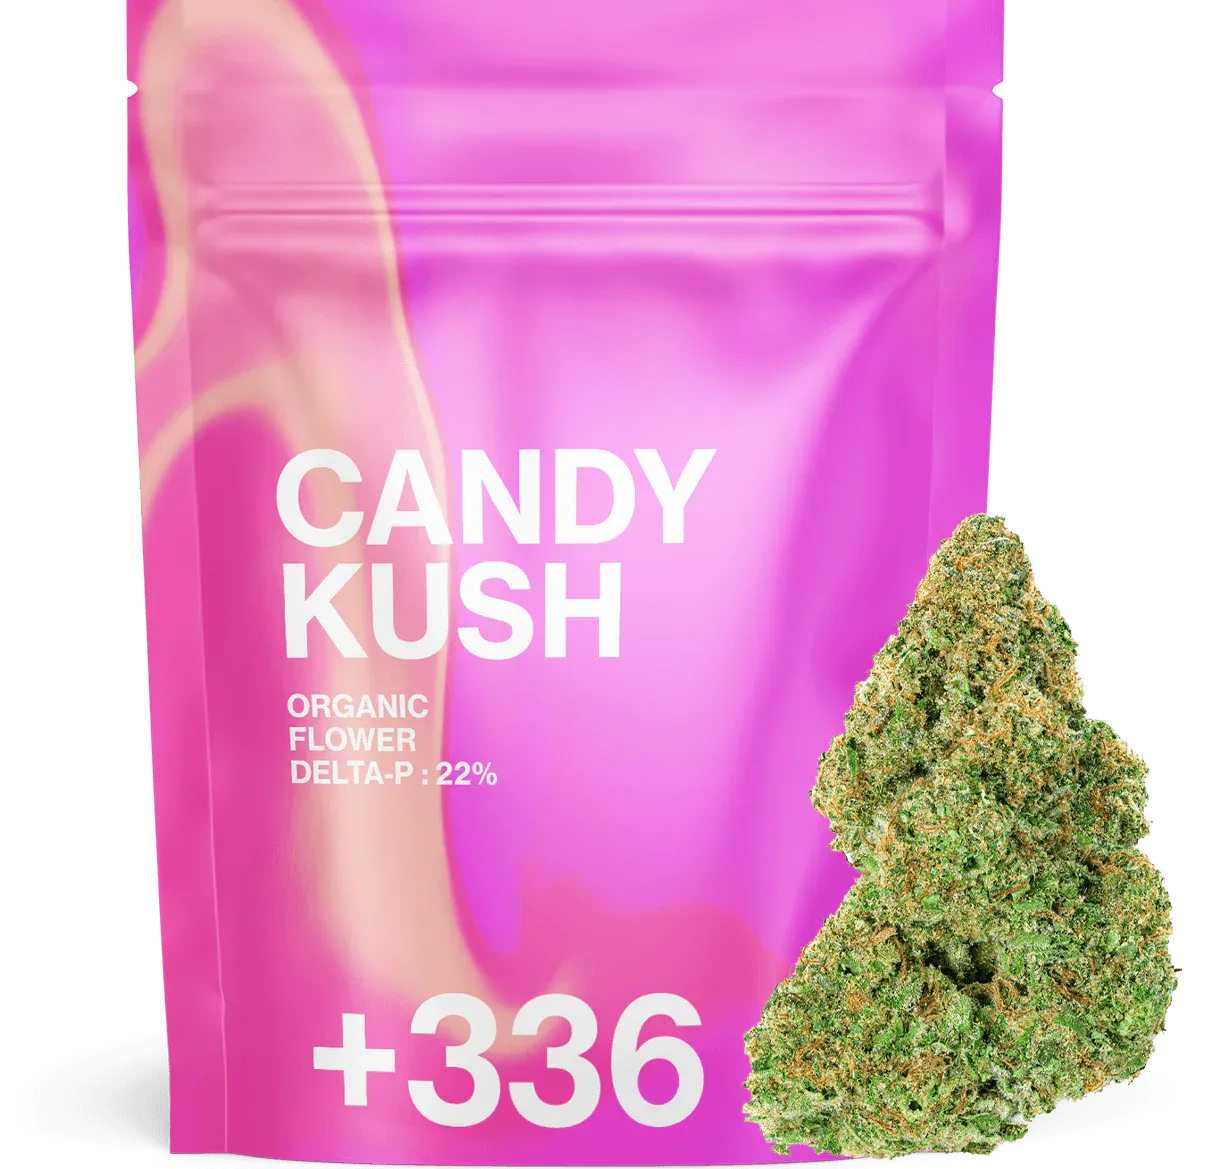 Candy Kush Delta P 22% - Tealer420